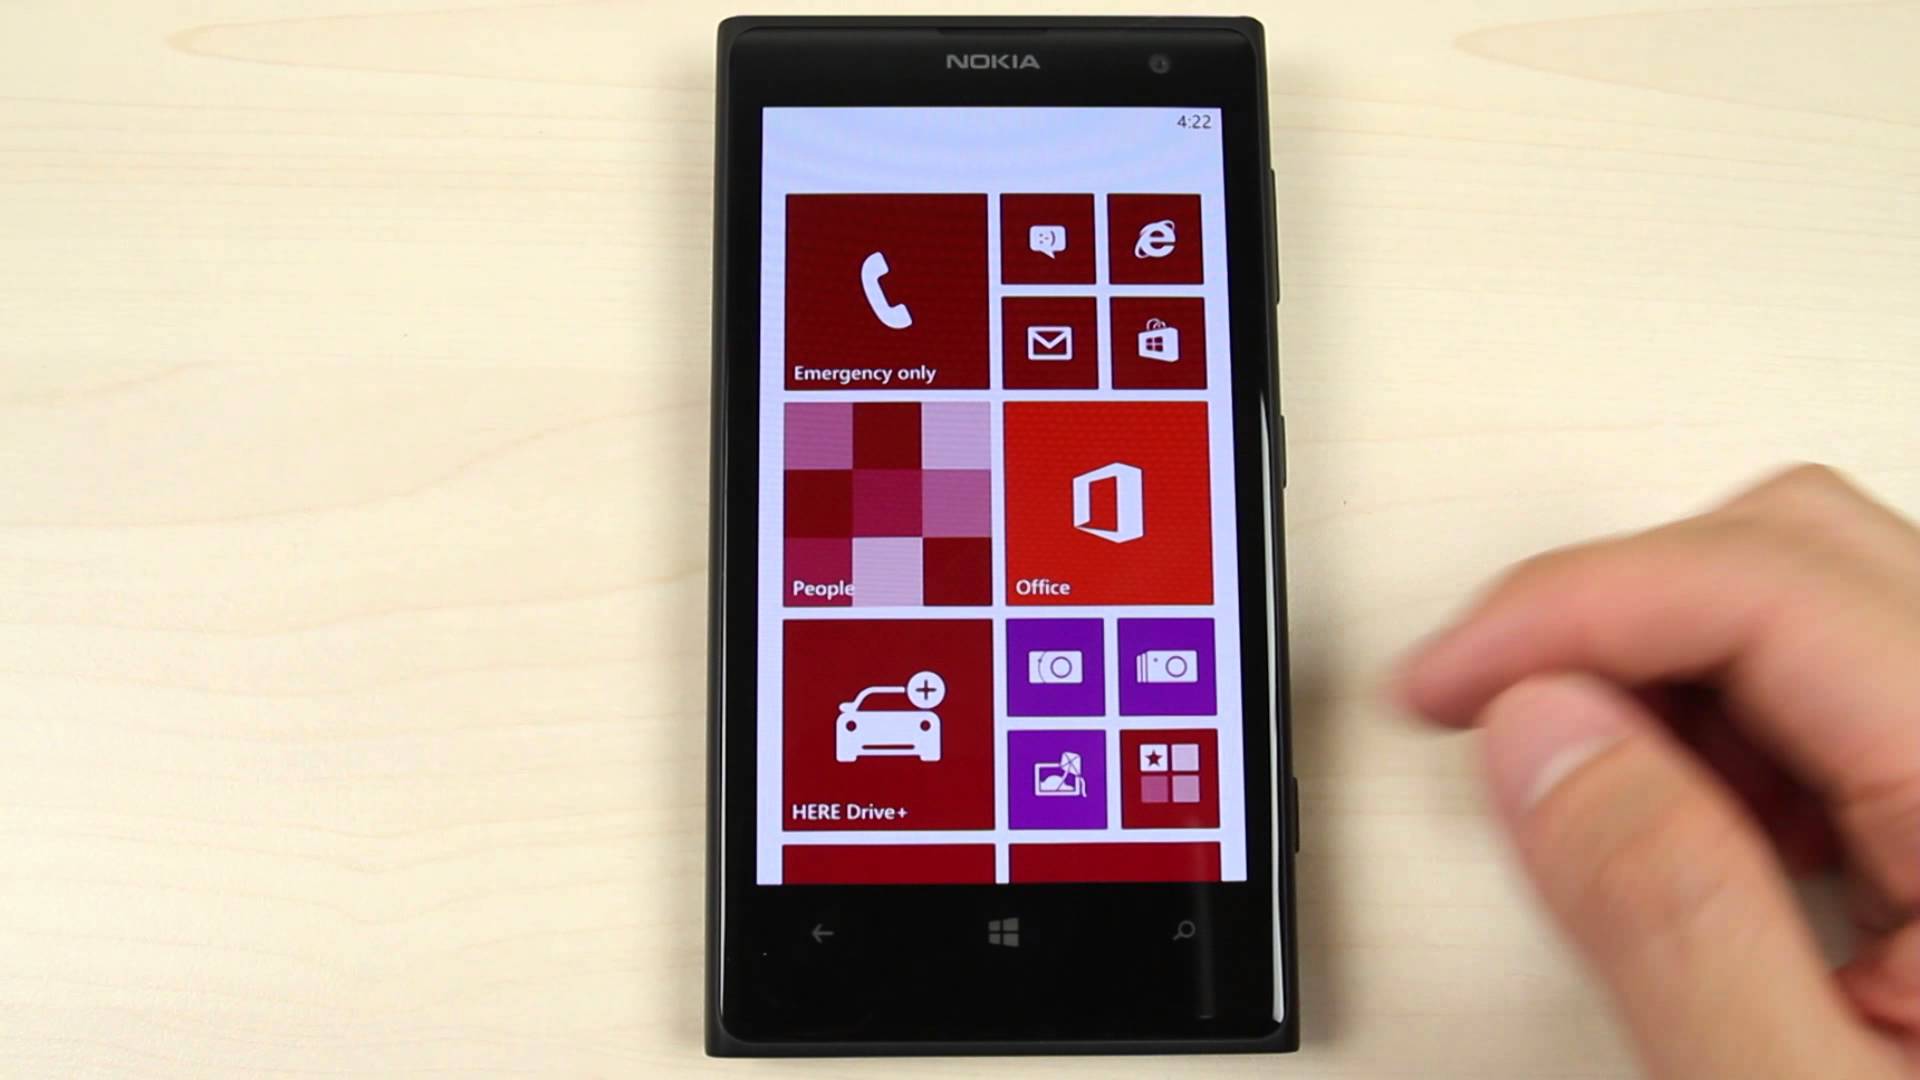 The Theme And Lock Screen Wallpaper On Nokia Lumia